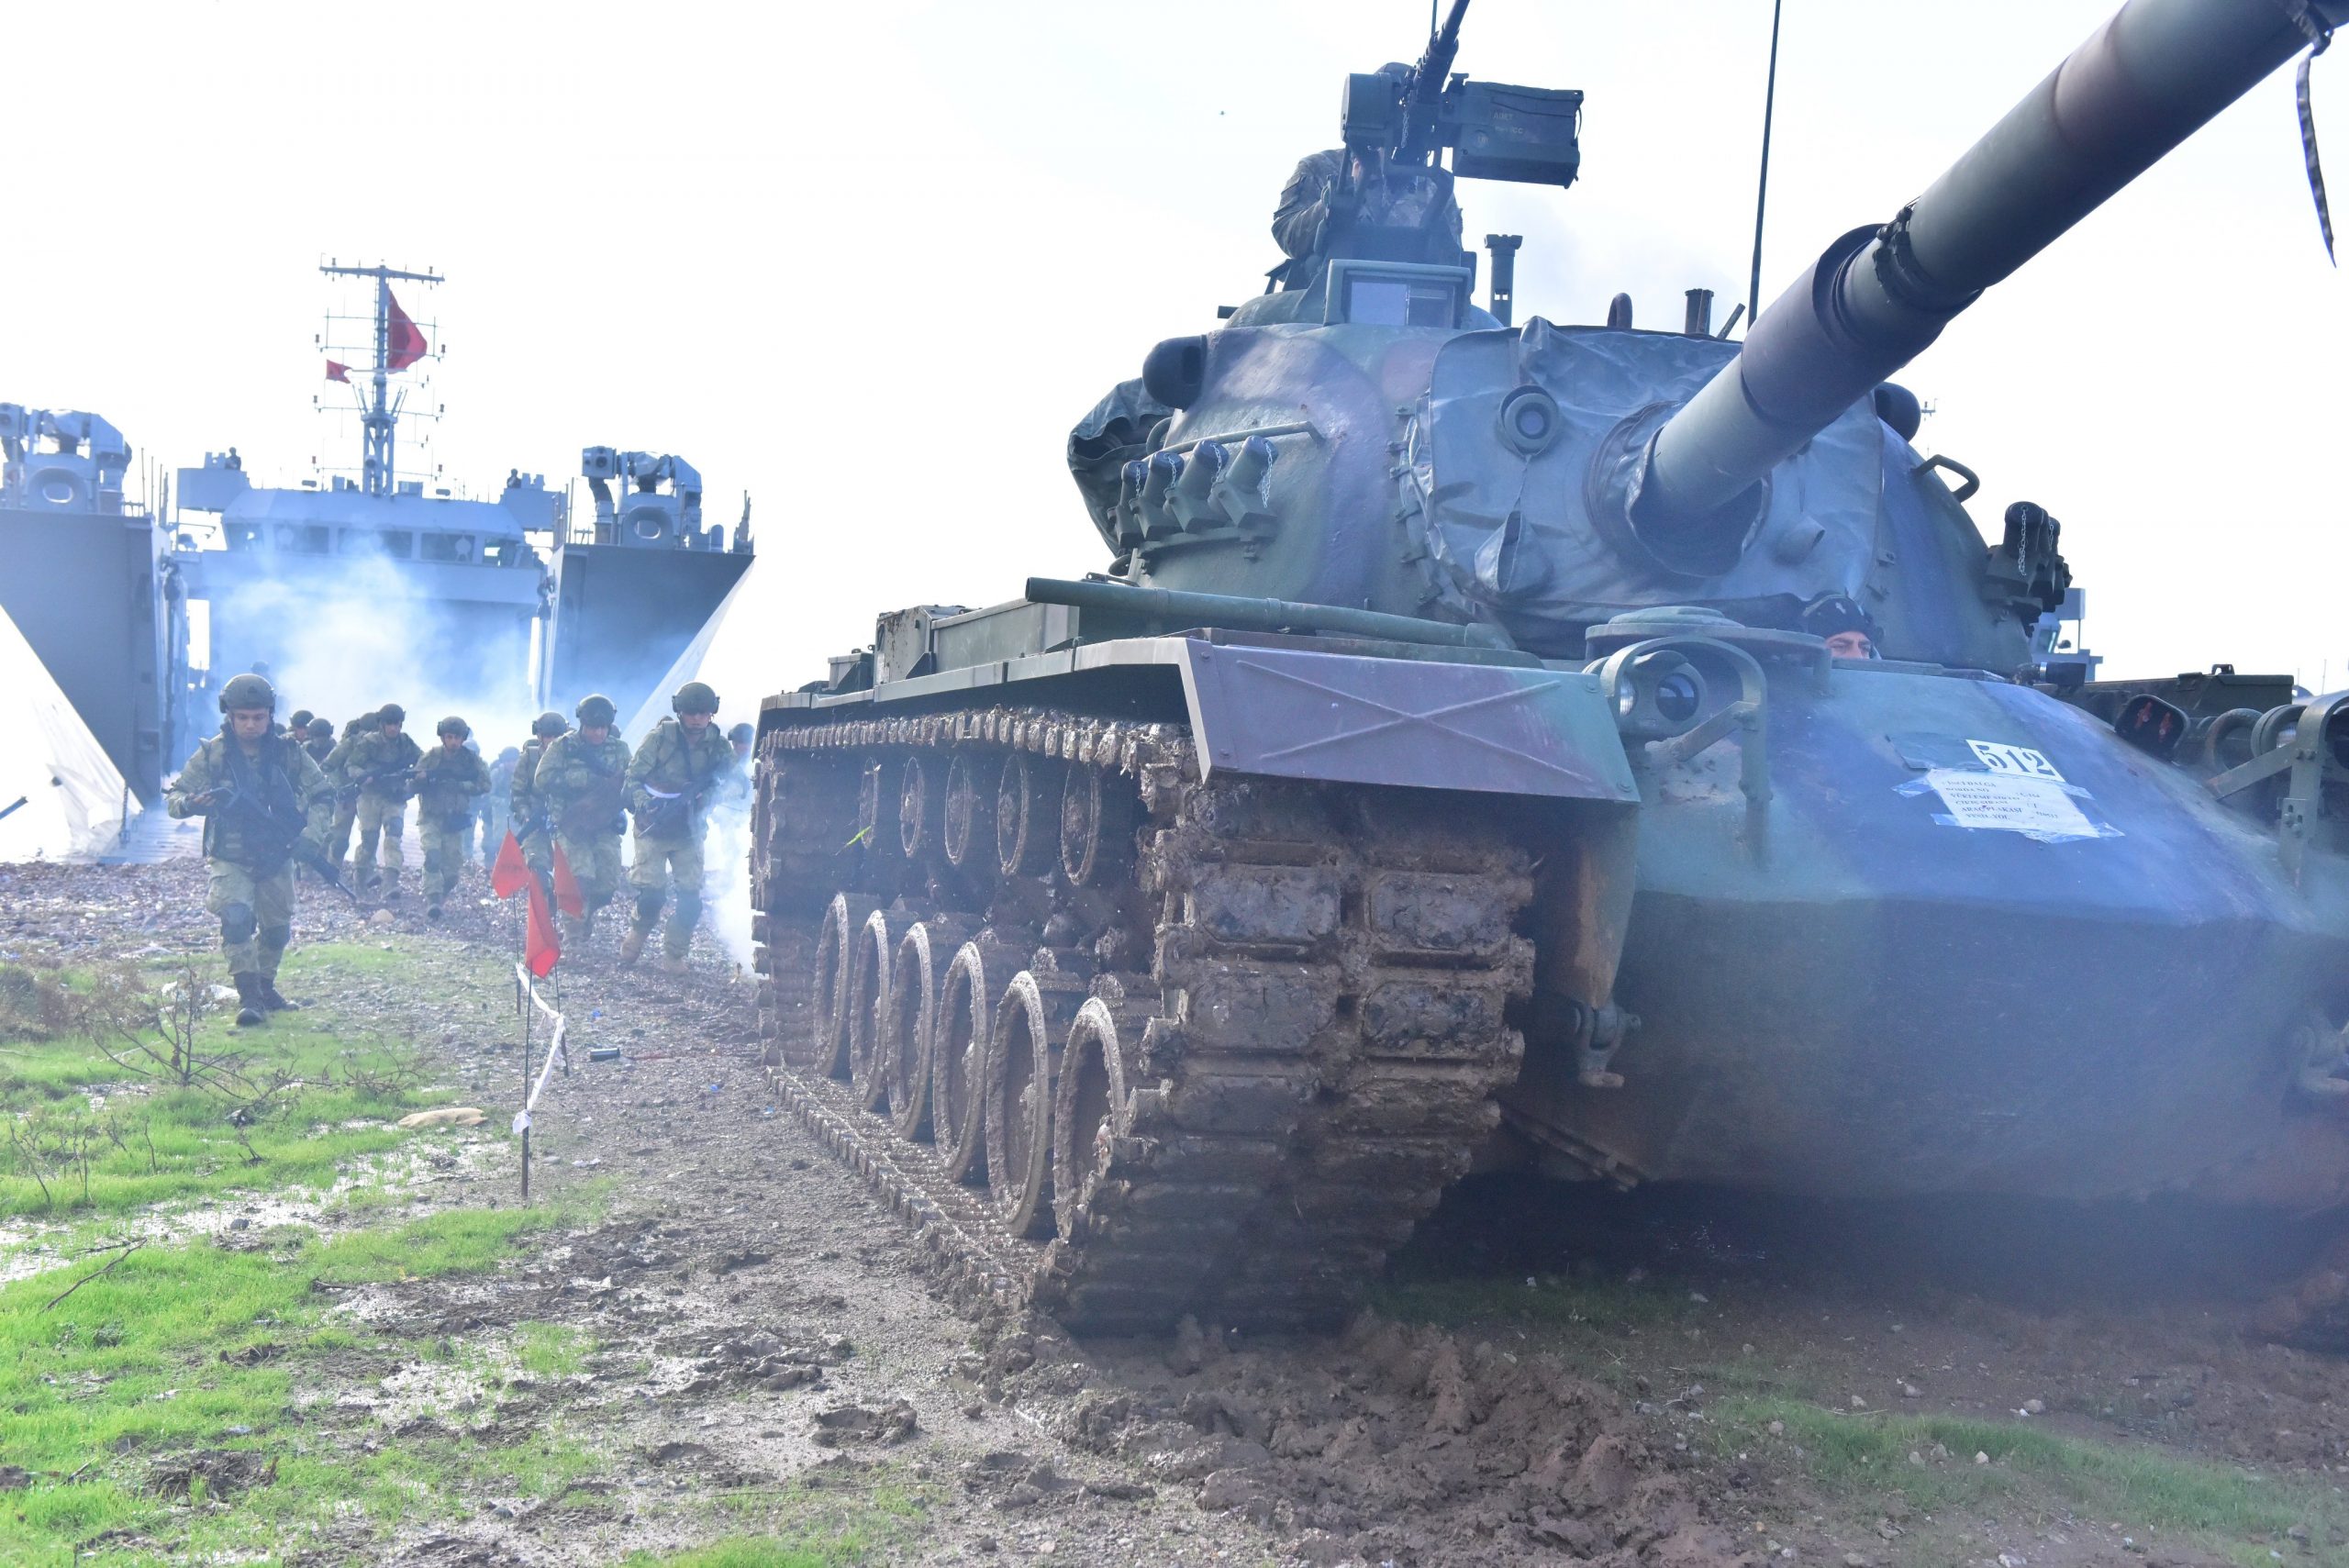 Future Warfare: Aποβατικές Ασκήσεις εναντίον της Ελλάδας με συμμετοχή της Στρατιάς του Αιγαίου διεξήγαγε η Τουρκία